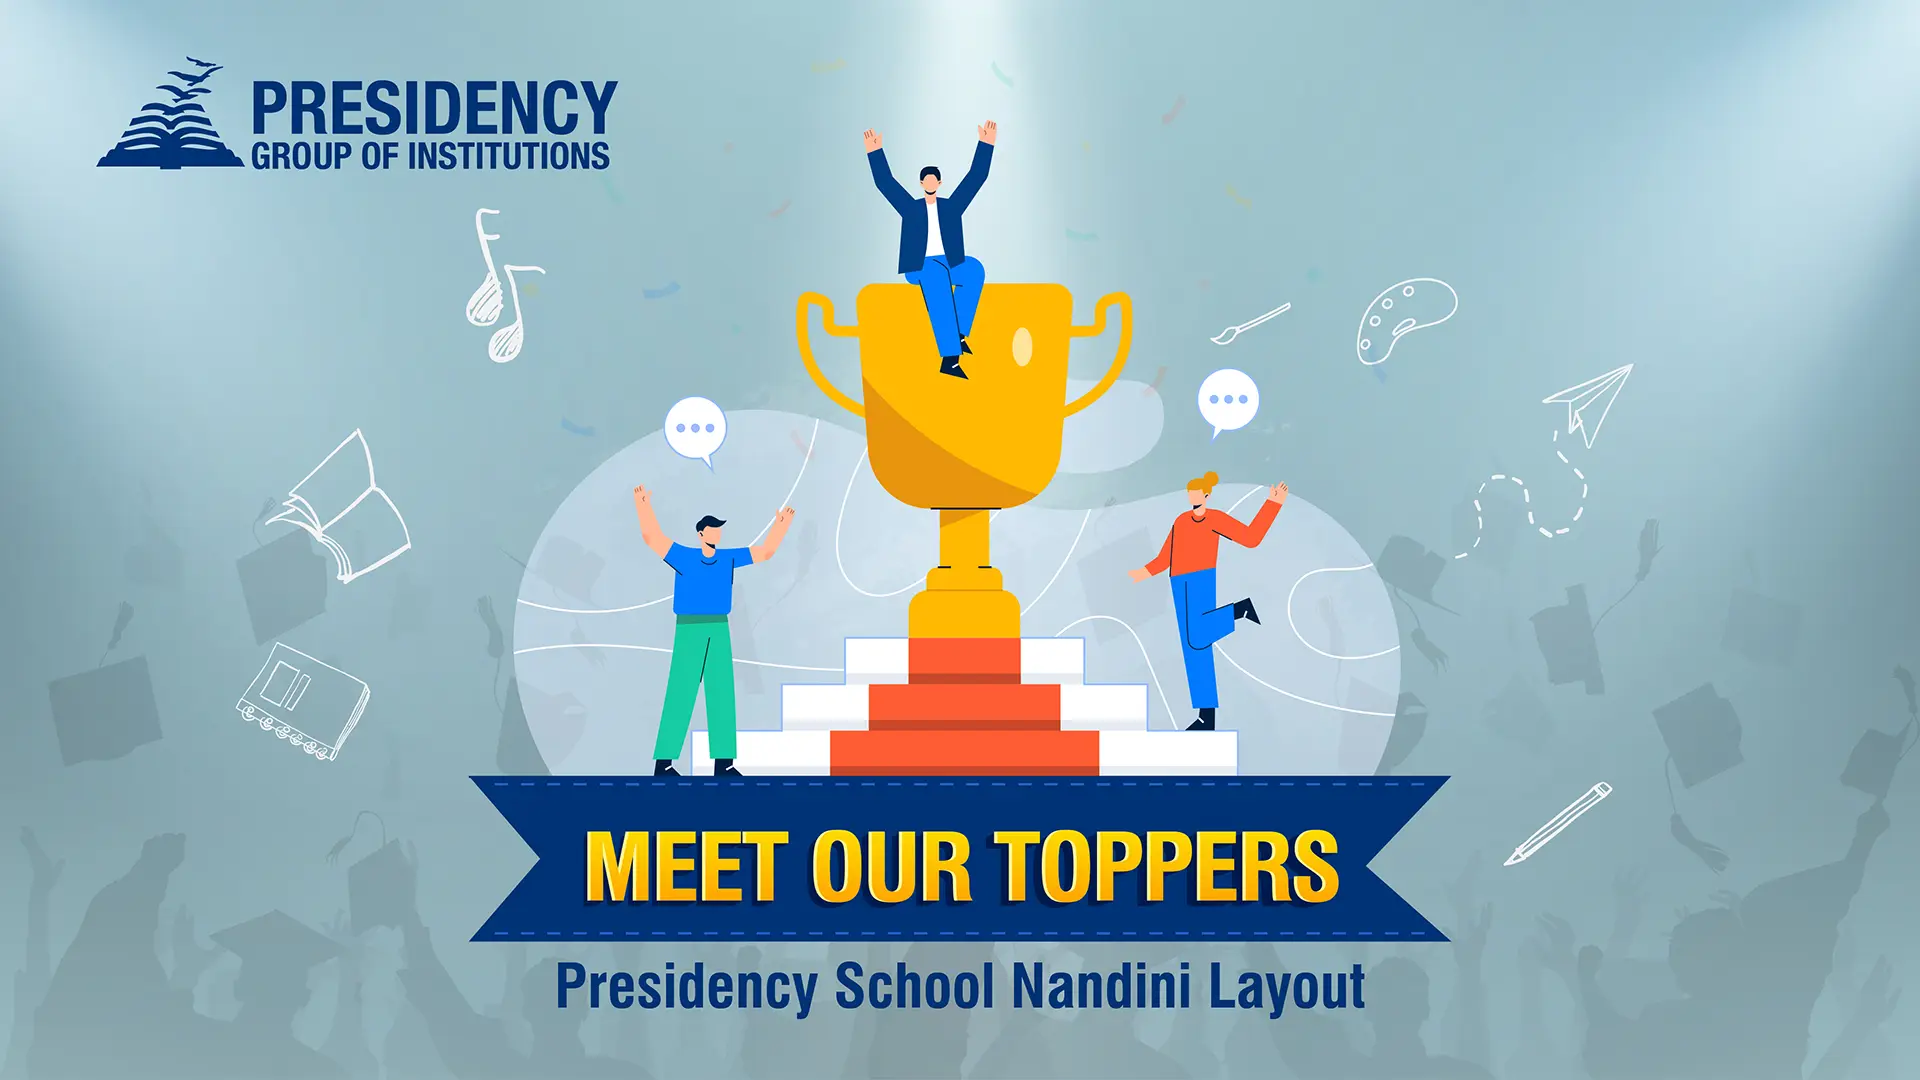 The school toppers of Presidency school Nandini Layout